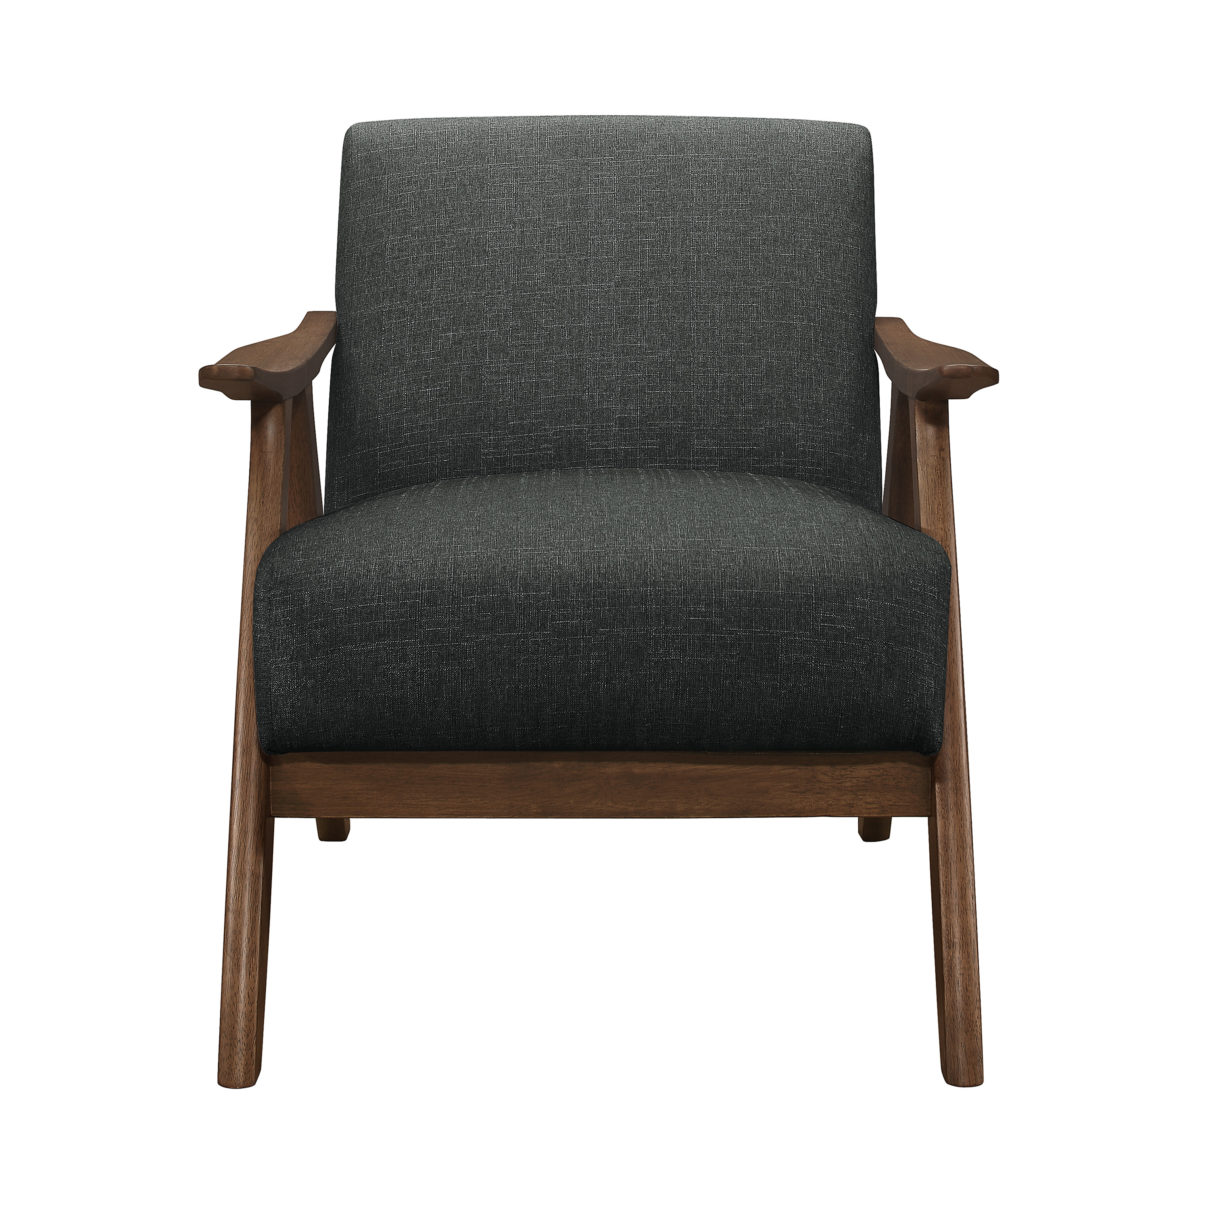 RETRO DARK GREY ACCENT CHAIR - Arrow Furniture